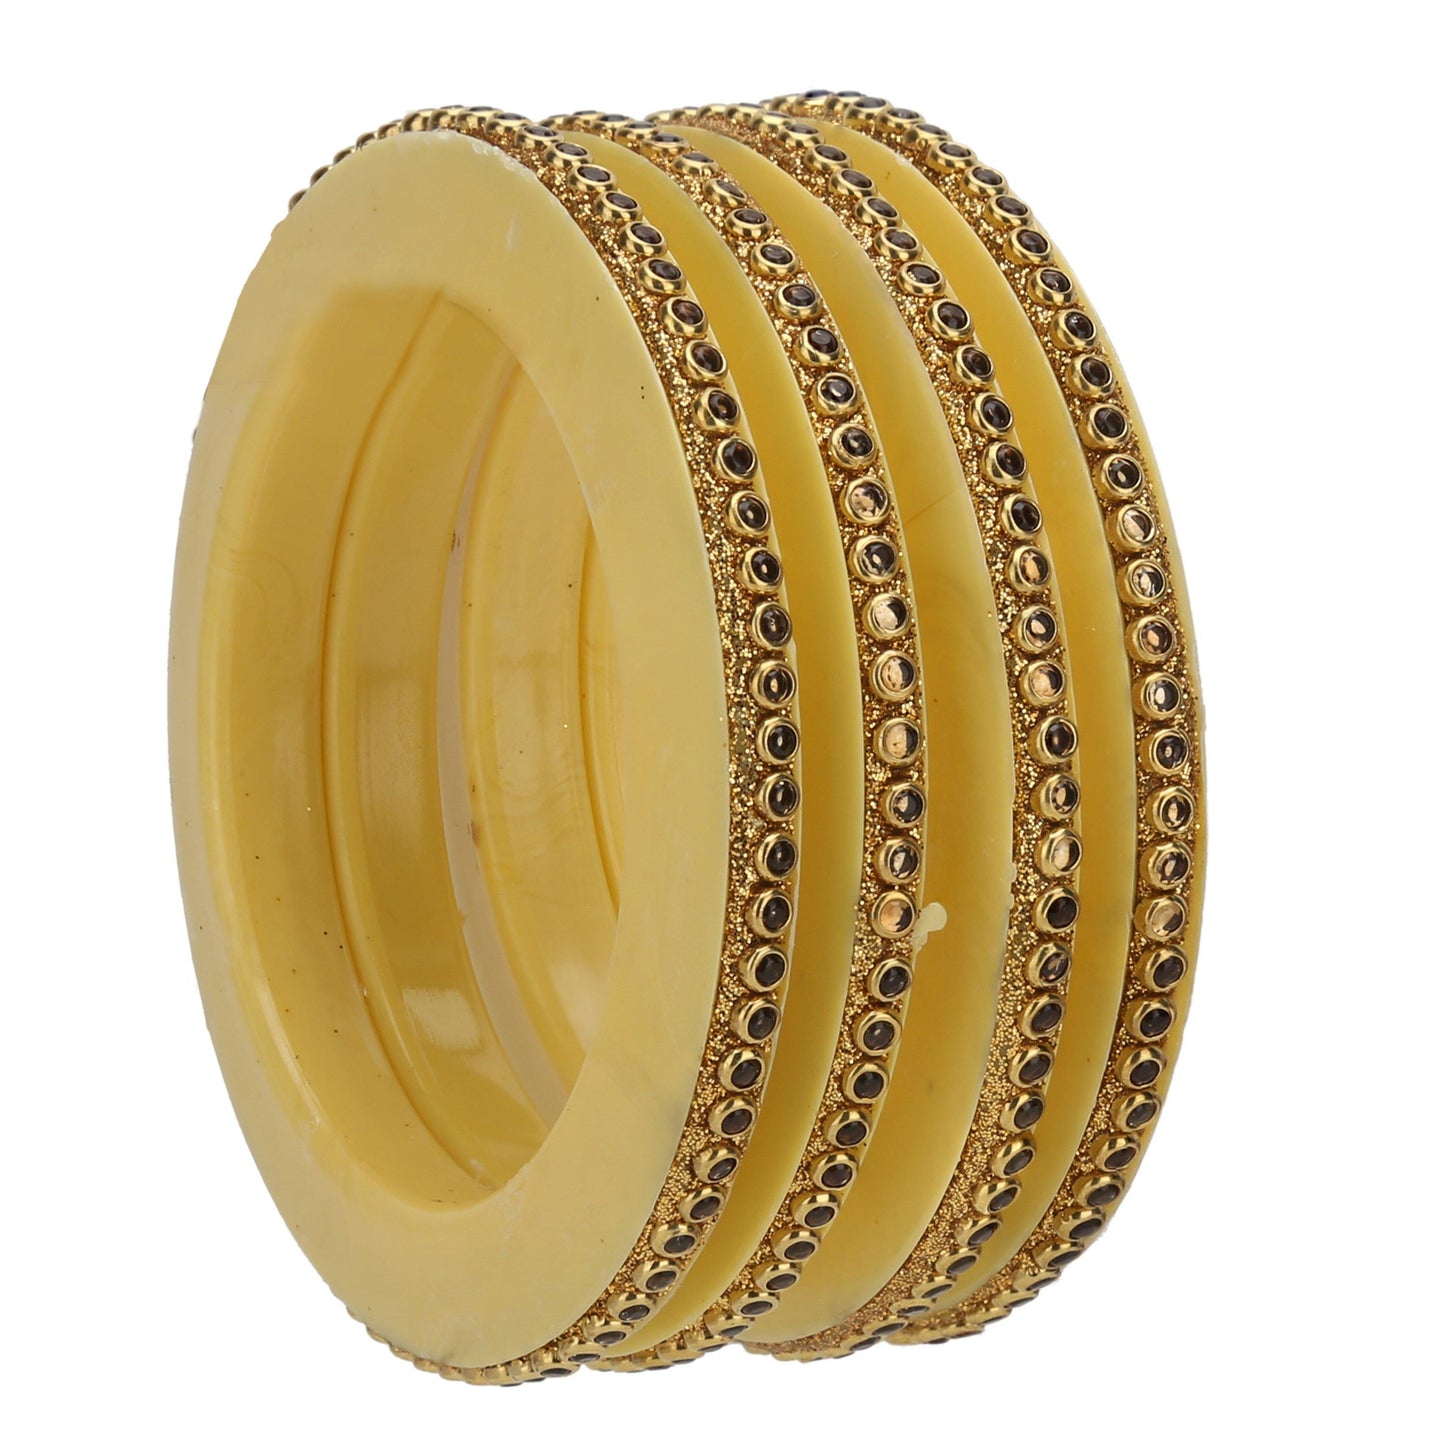 sukriti rajasthani handcrafted kundan pearl plastic golden bridal chuda bangles for women – set of 18